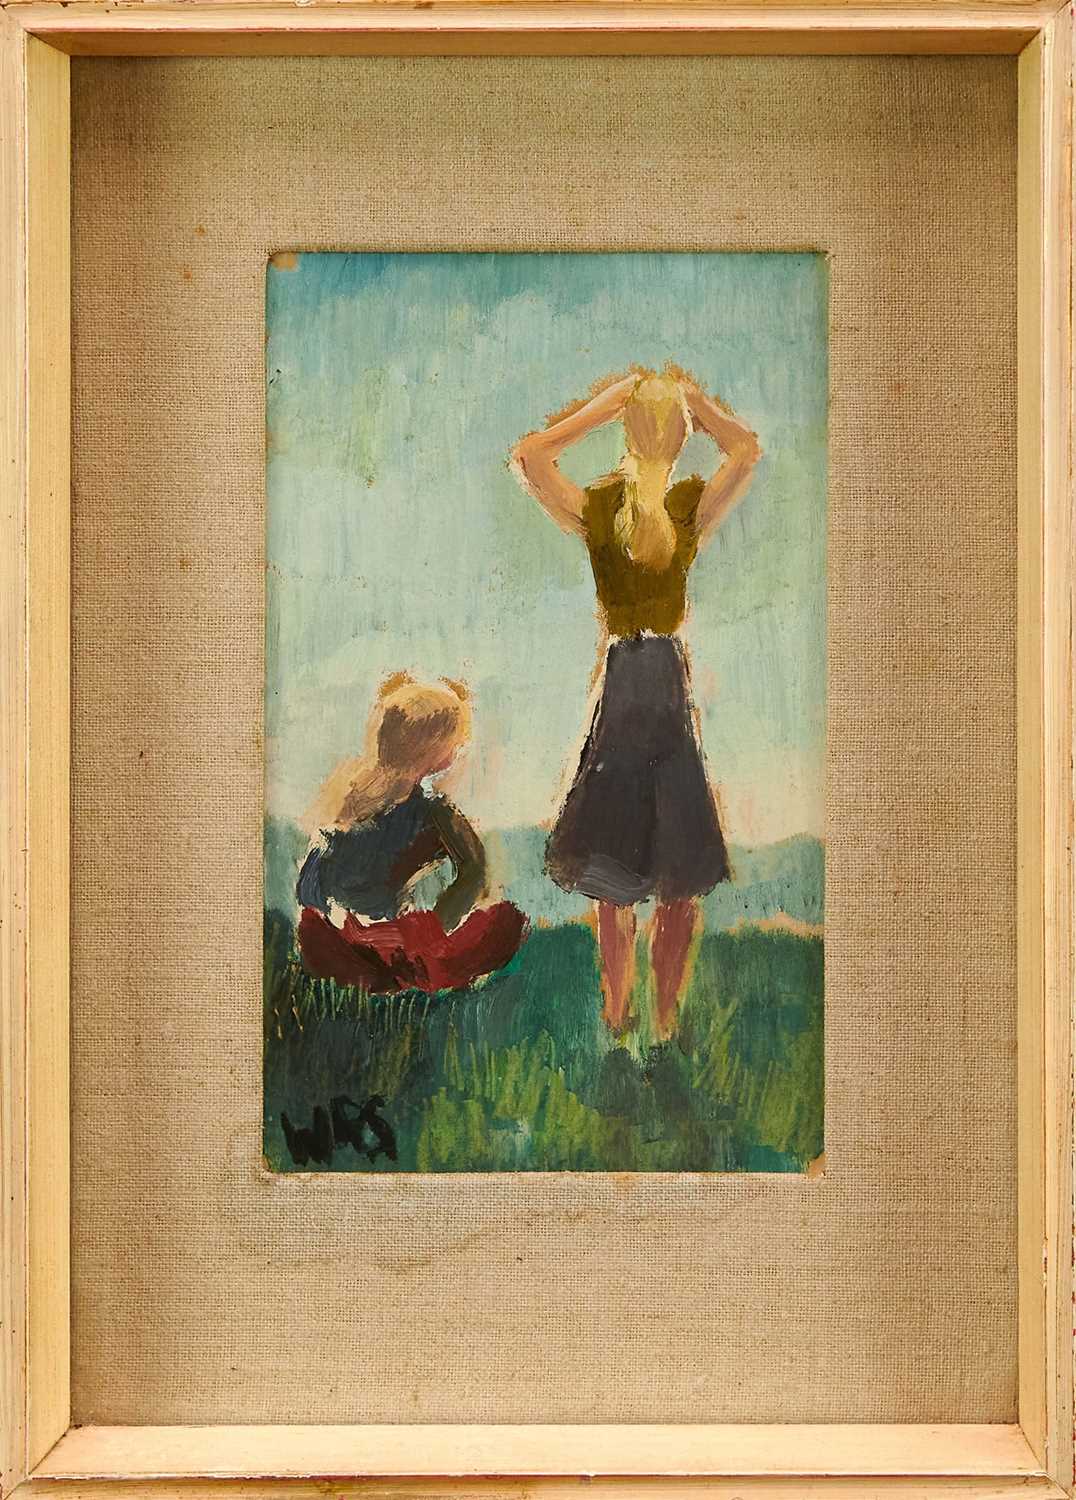 Lot 978 - *Robert Sadler (1909-2001) Figurative, Two Girls on the Beach, 1956, oil on board, signed WRS, inscribed verso, 27.5 x 19cm, framed